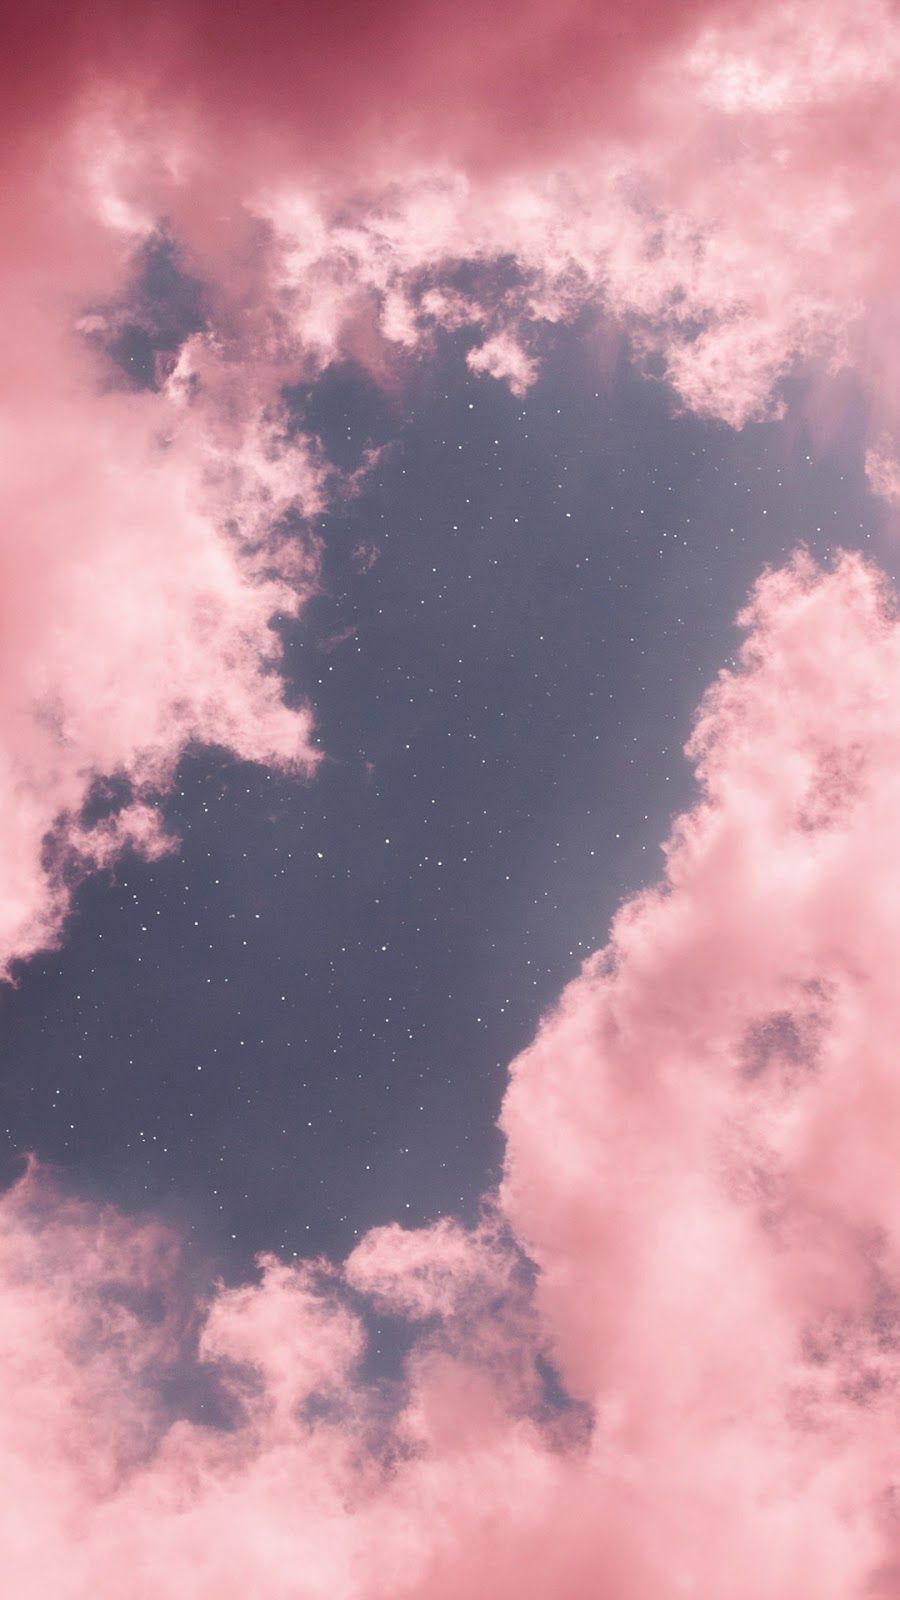 Pink Clouds Wallpapers On Wallpaperdog Pink galaxy, universe, cosmos 4k ultrahd wallpaper: pink clouds wallpapers on wallpaperdog